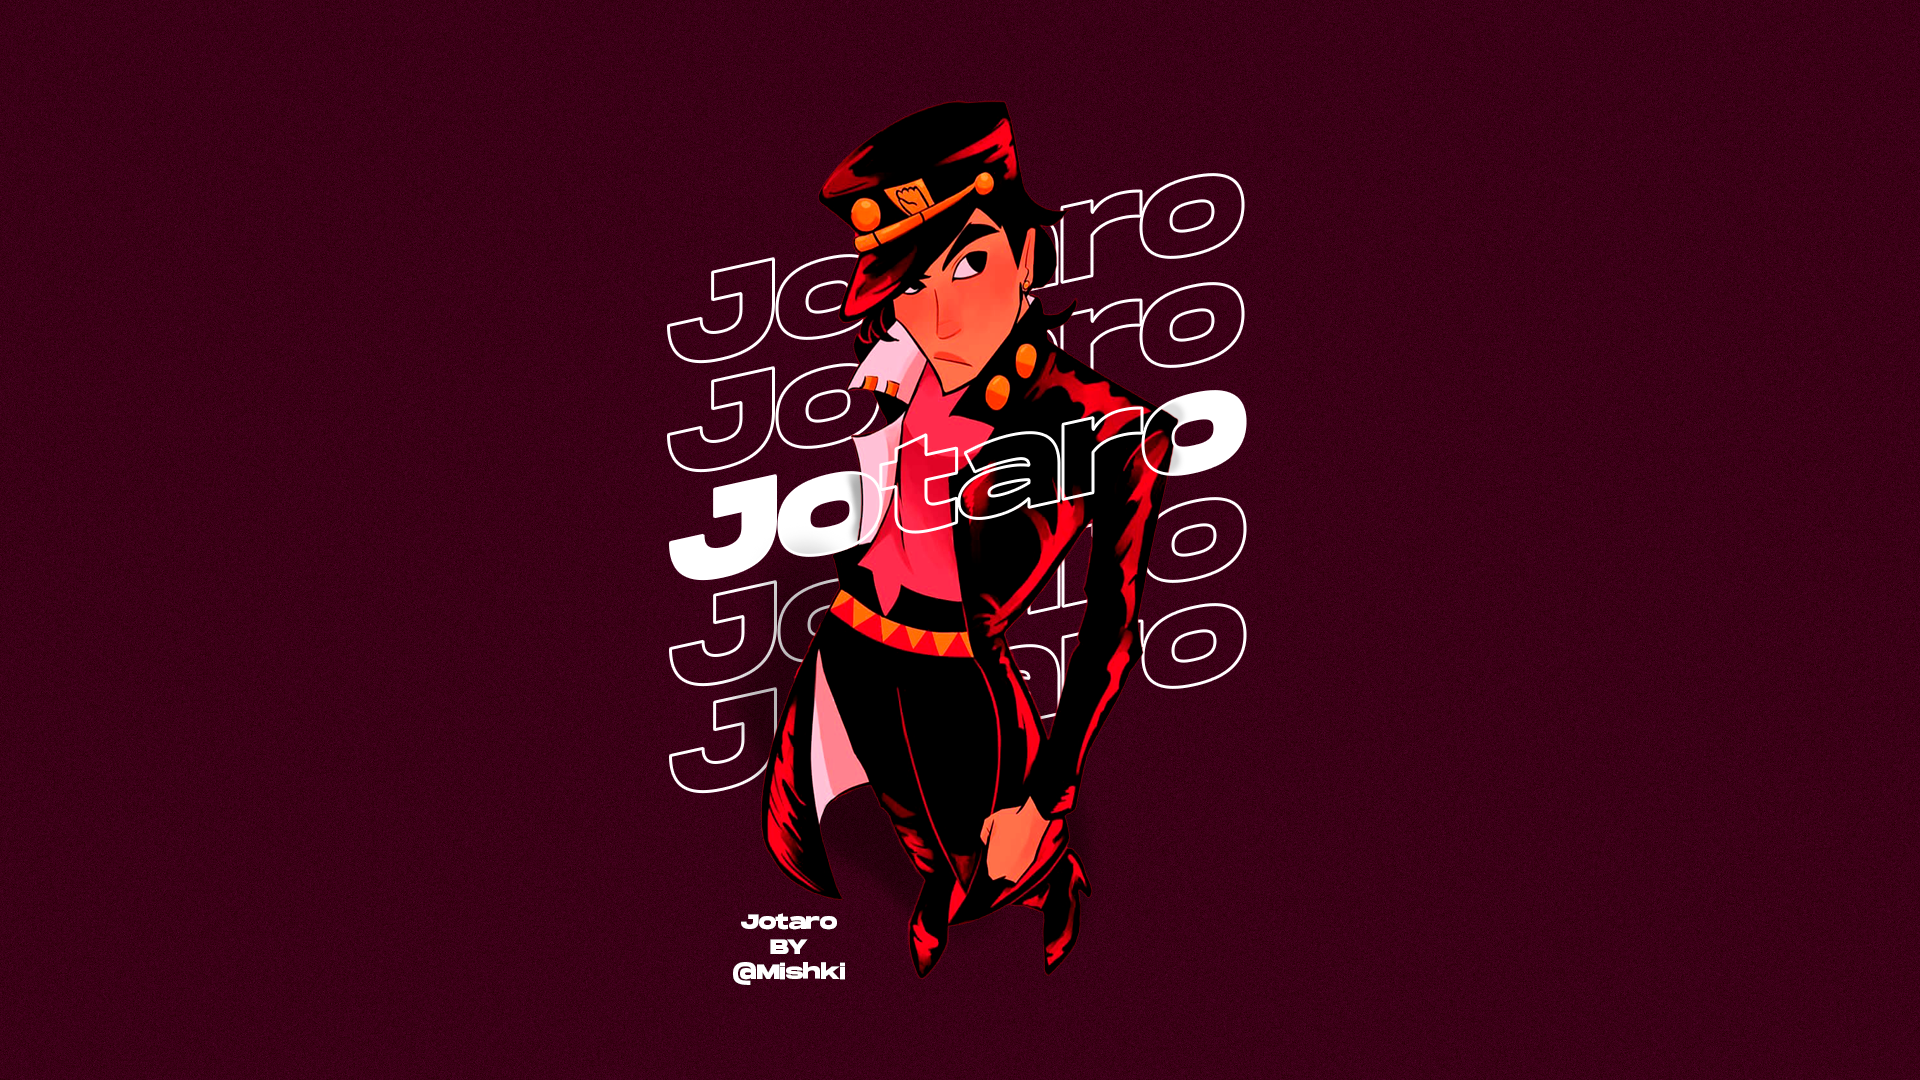 Anime 1920x1080 Jotaro Kujo JoJo's Bizarre Adventure anime red background simple background